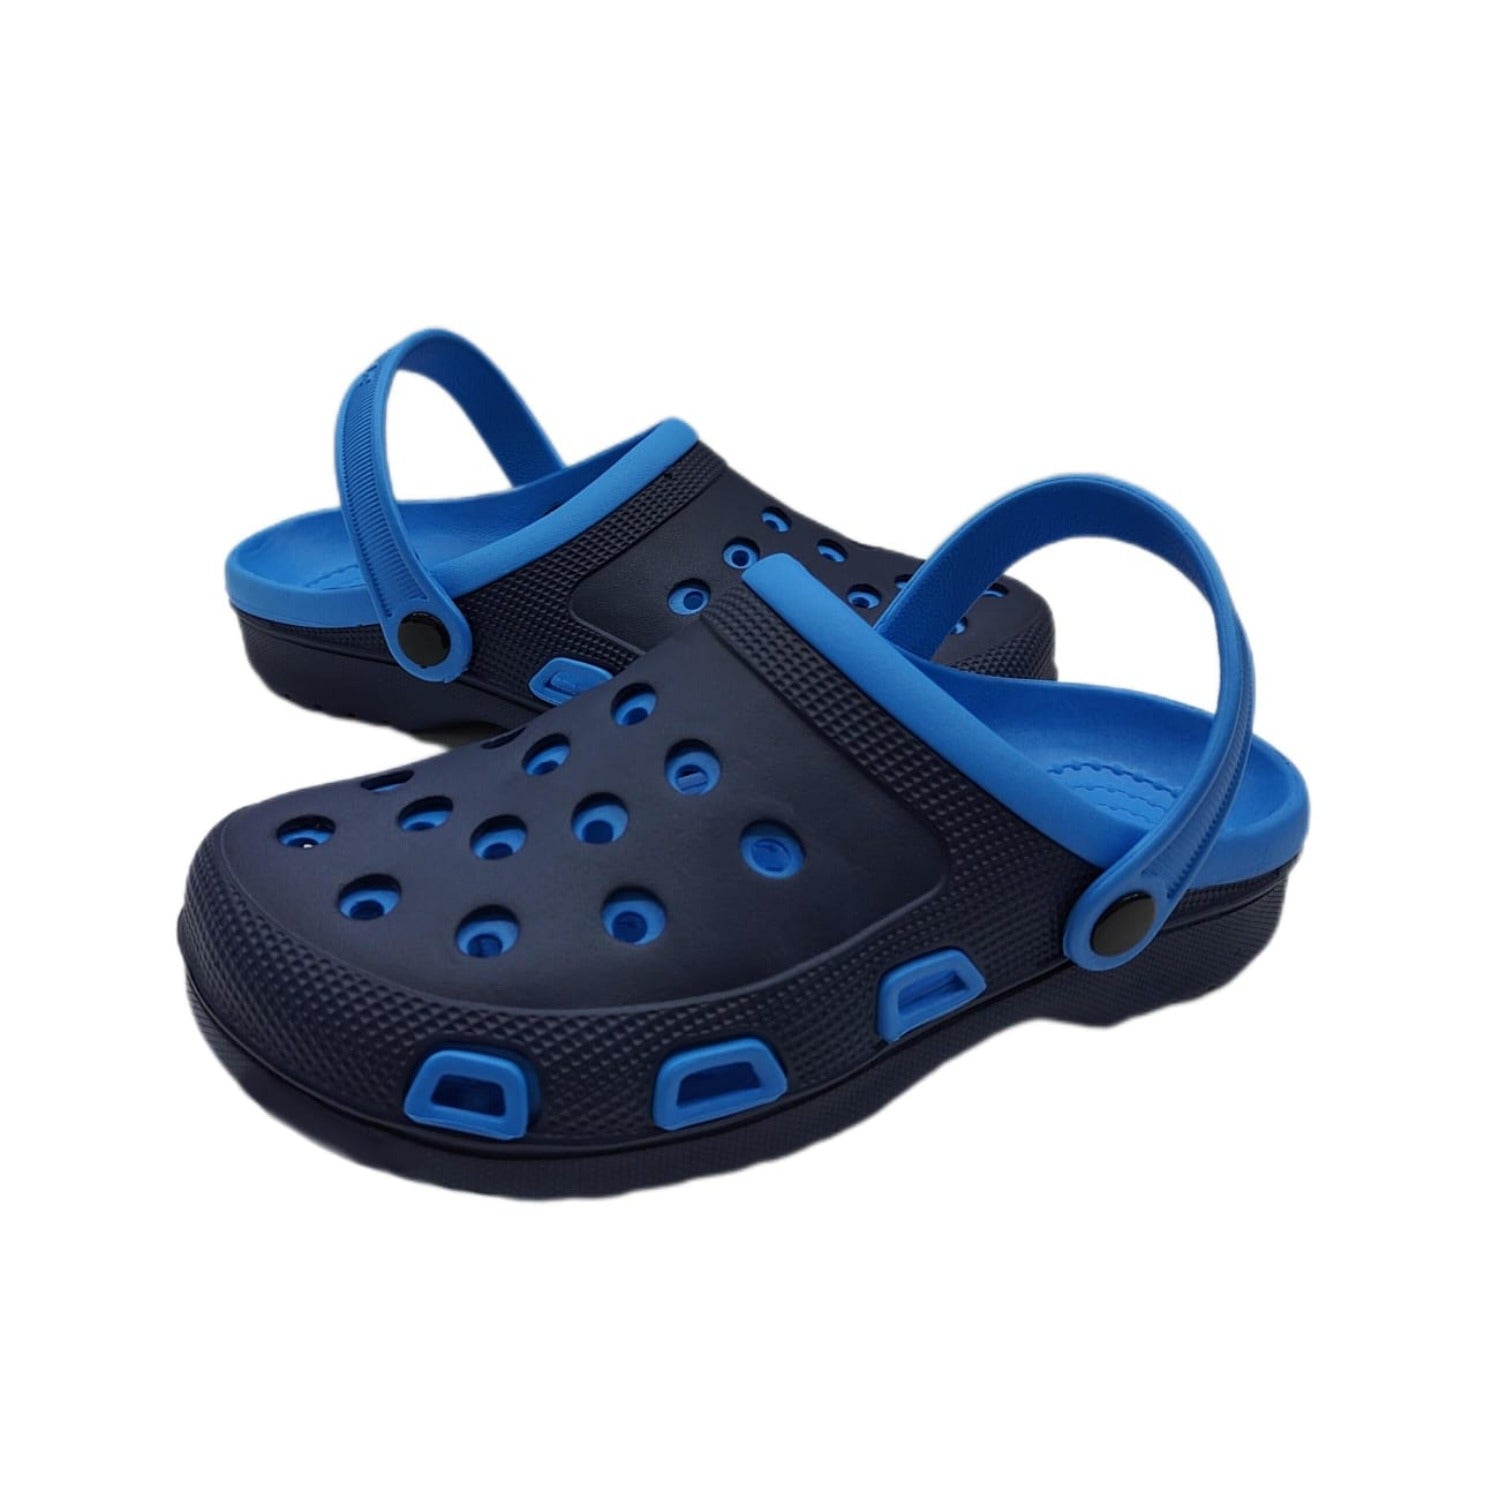 Buy Clog Sandal at Gokyo Outdoor Clothing & Gear